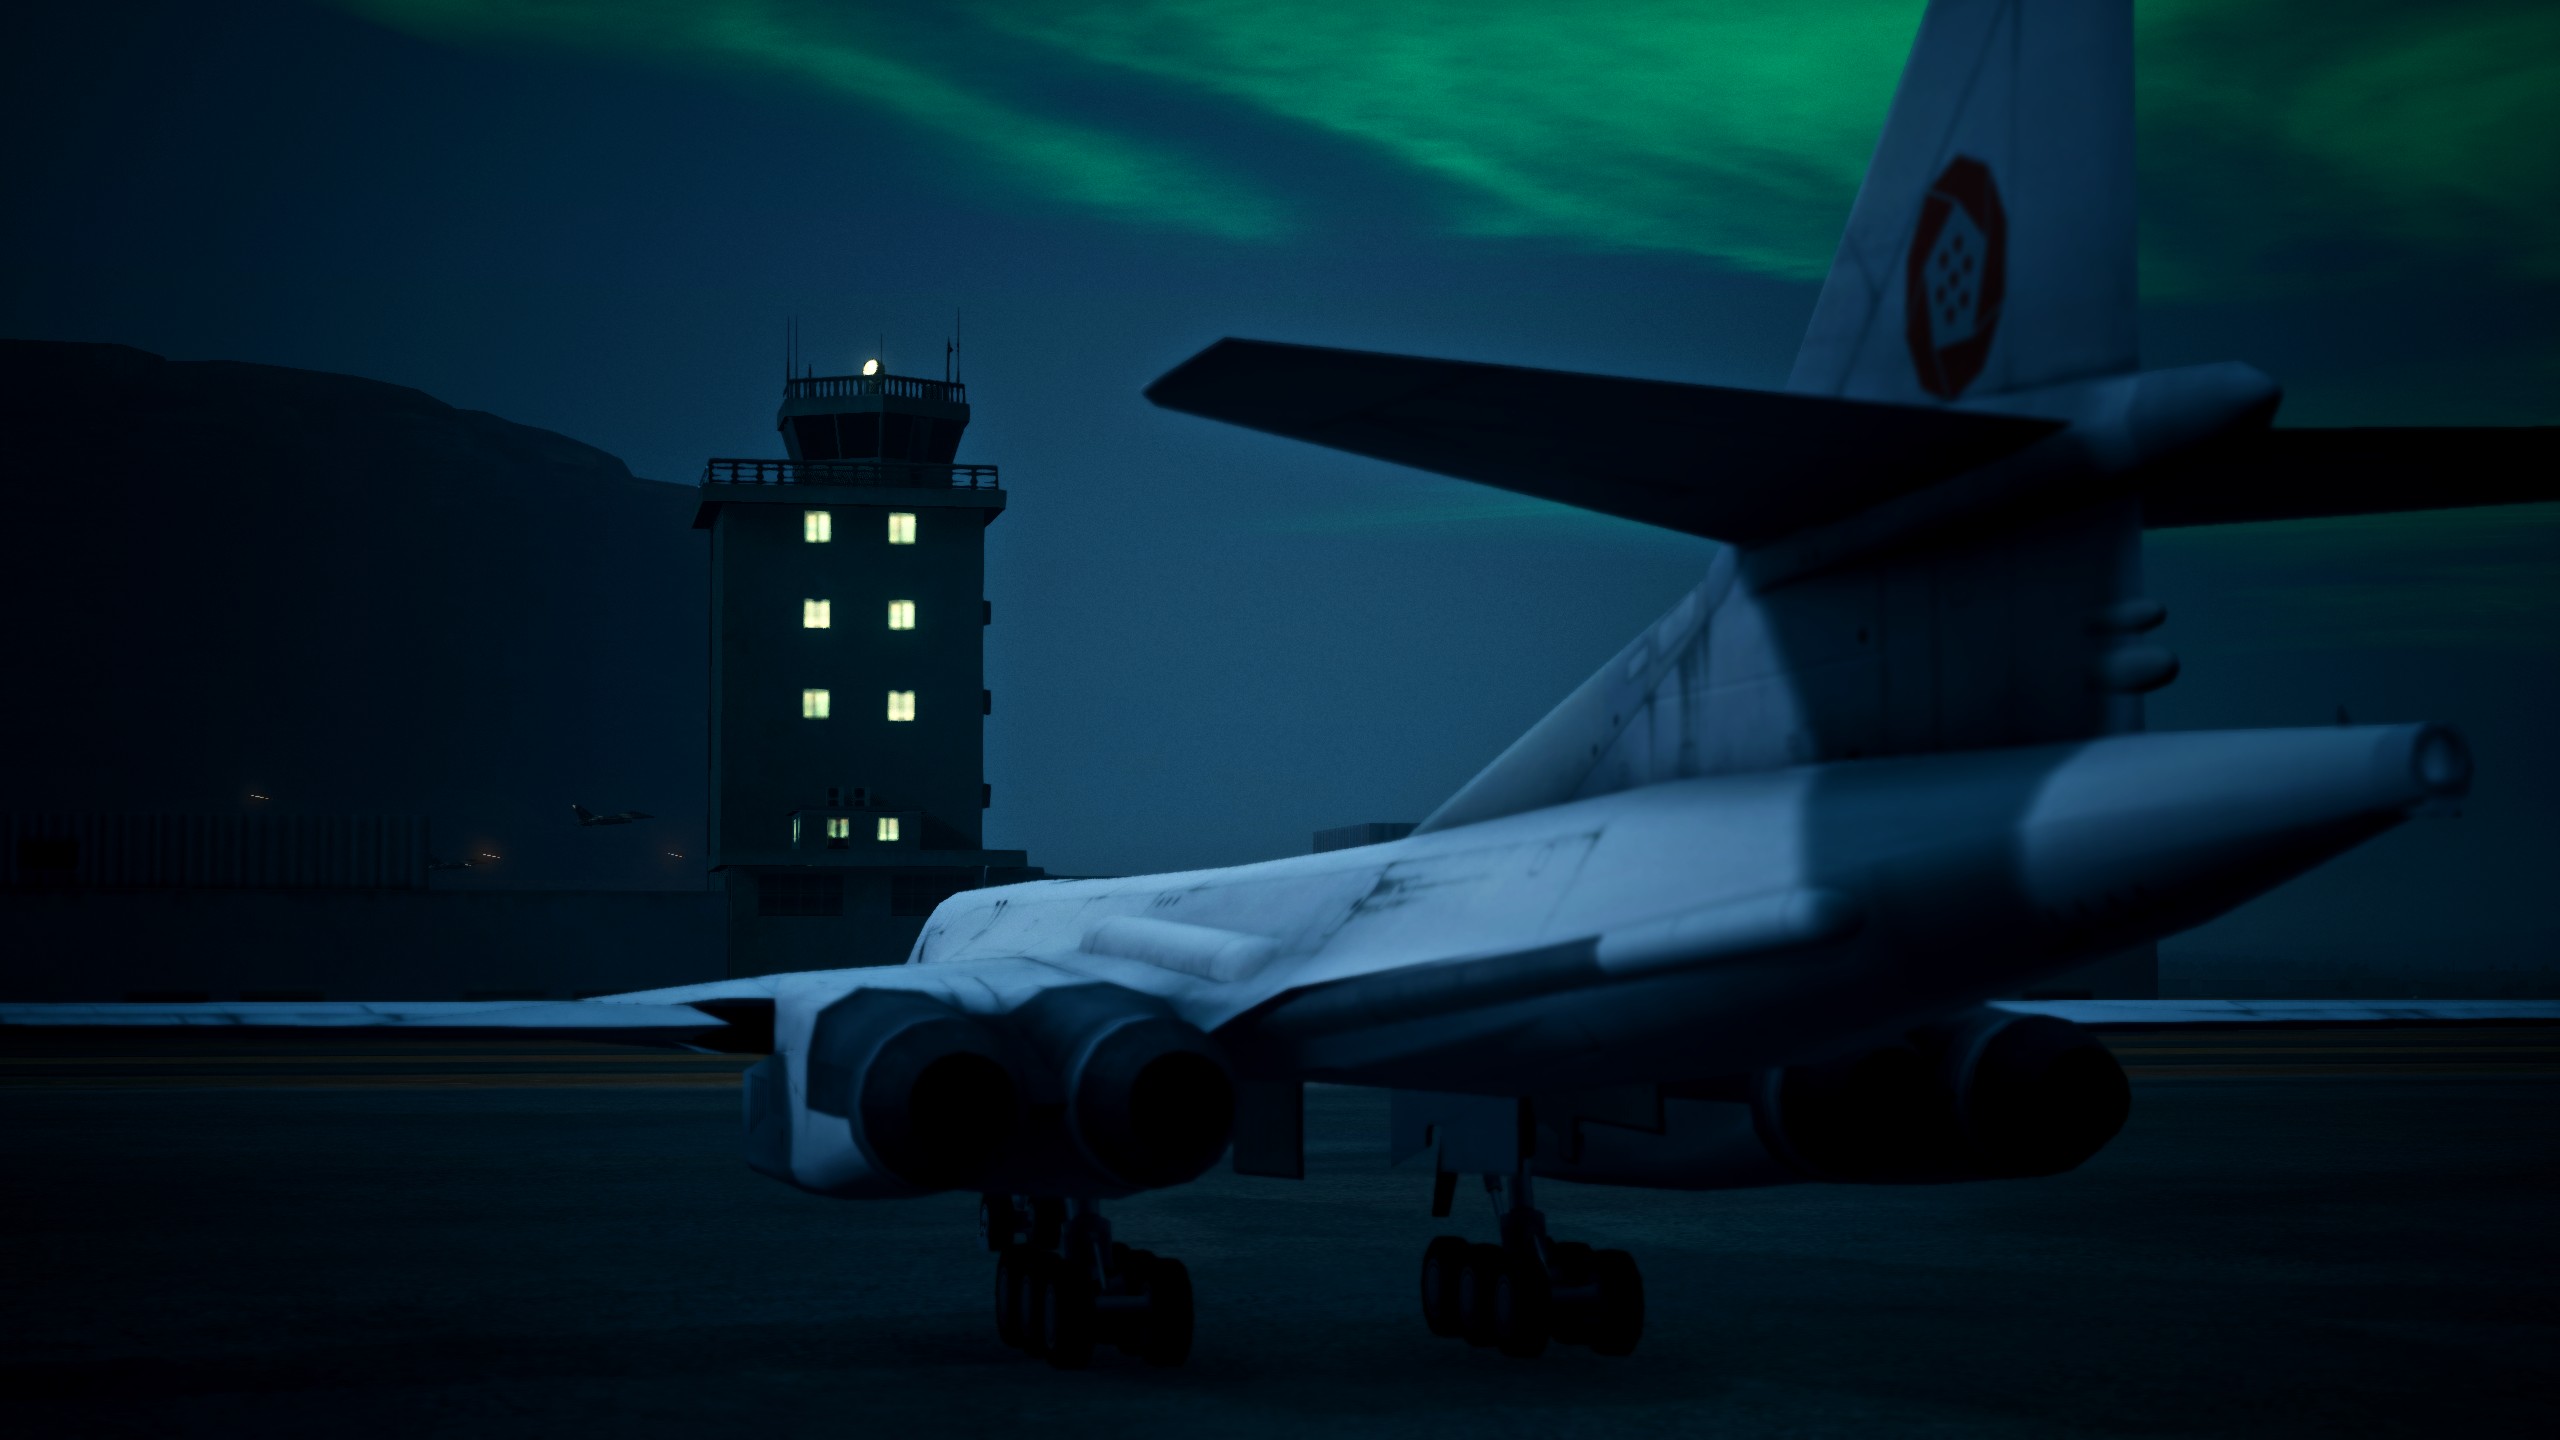 Mission 6 Long Night Lighting Mod v1.1 addon - Ace Combat 7